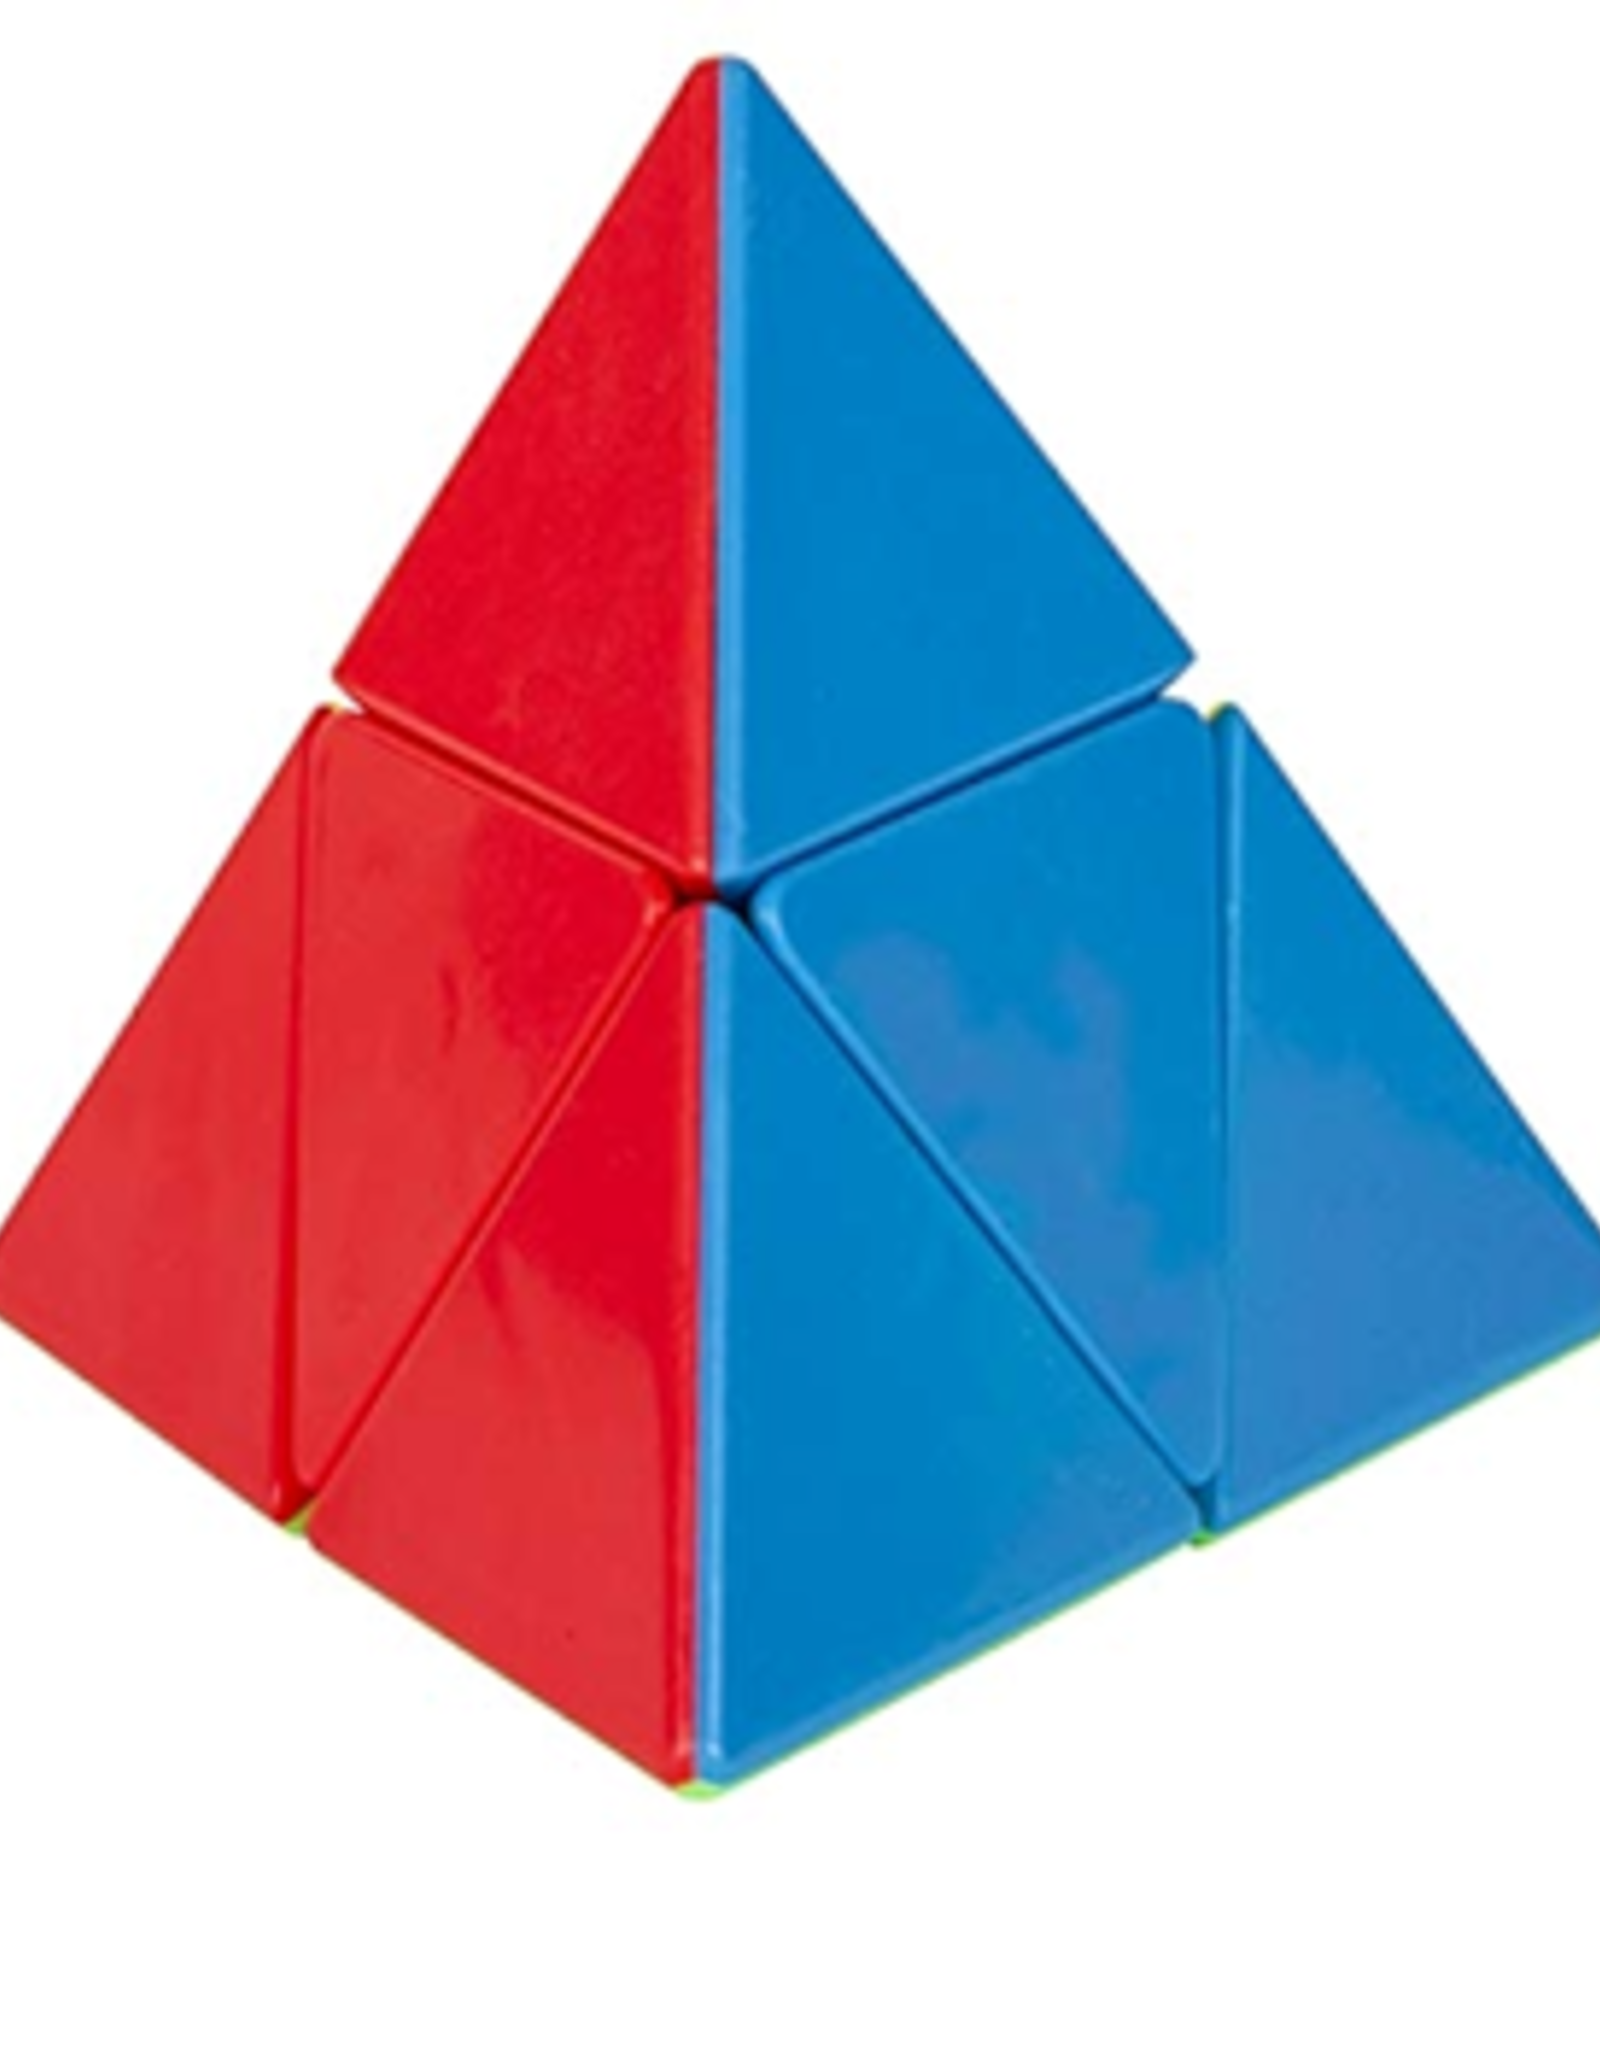 Duncan MonuMental Pyramid Puzzle